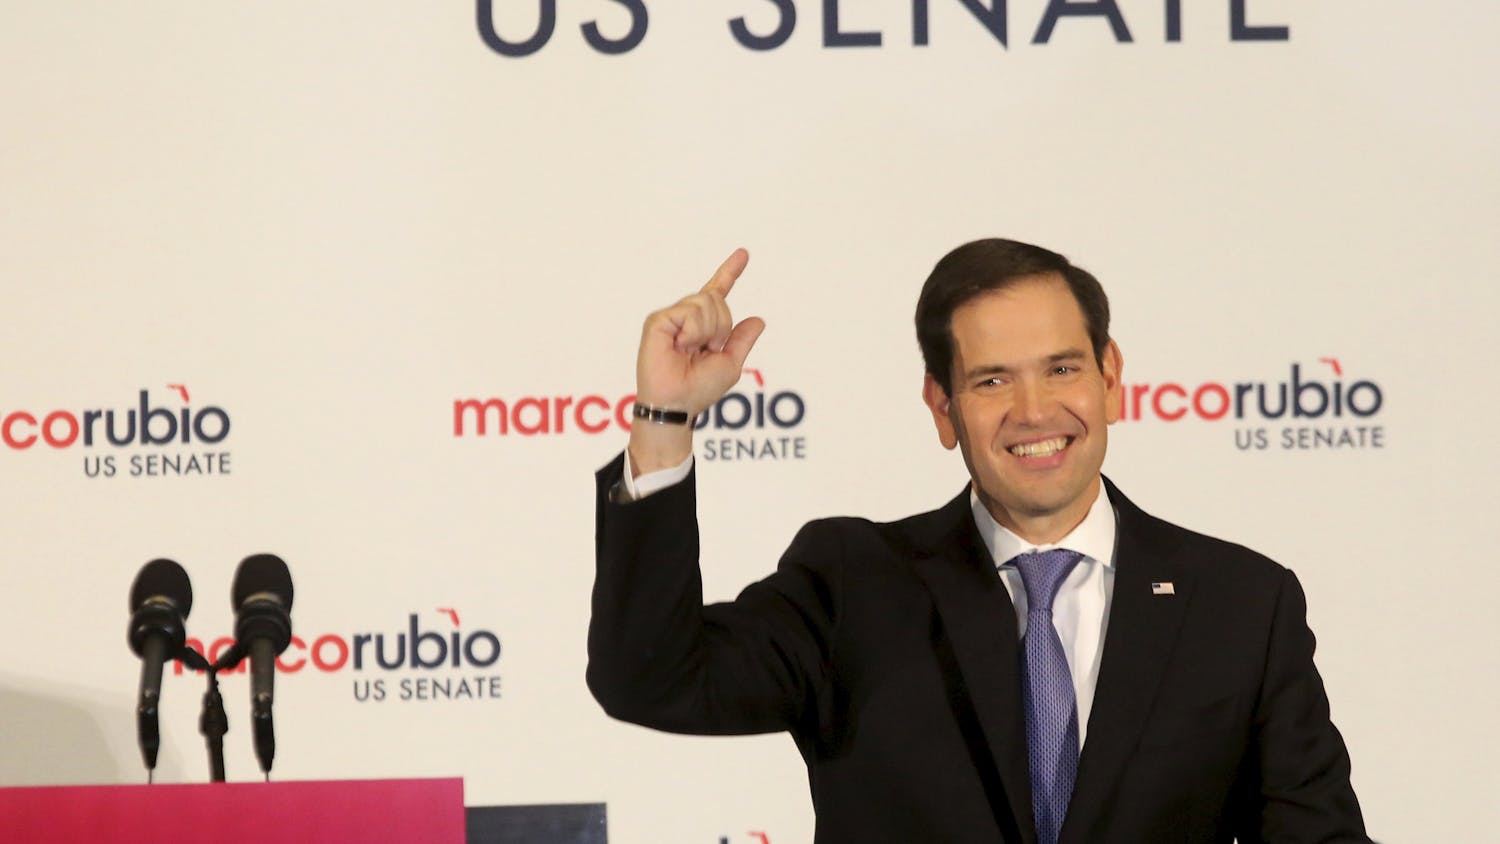 U.S. Sen. Marco Rubio, R-Fla., addresses supporters after winning a second term in the U.S. Senate on Nov. 8, 2016 in Miami. Rubio defeated U.S. Rep. Patrick Murphy, a two-term congressman.